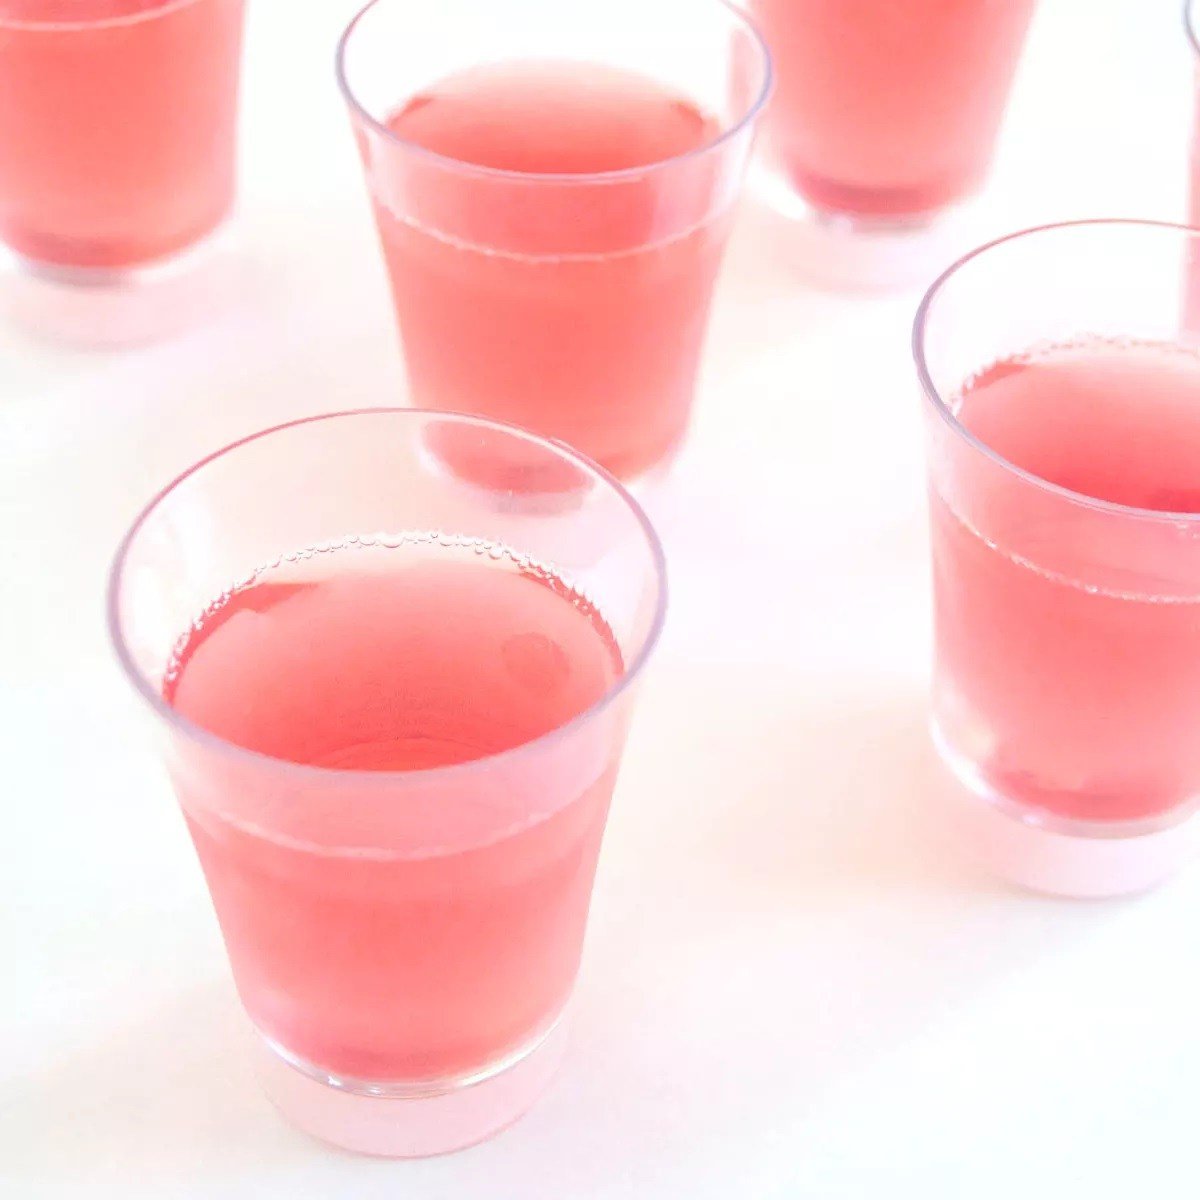 Wassermelone torch pudding and pink shots